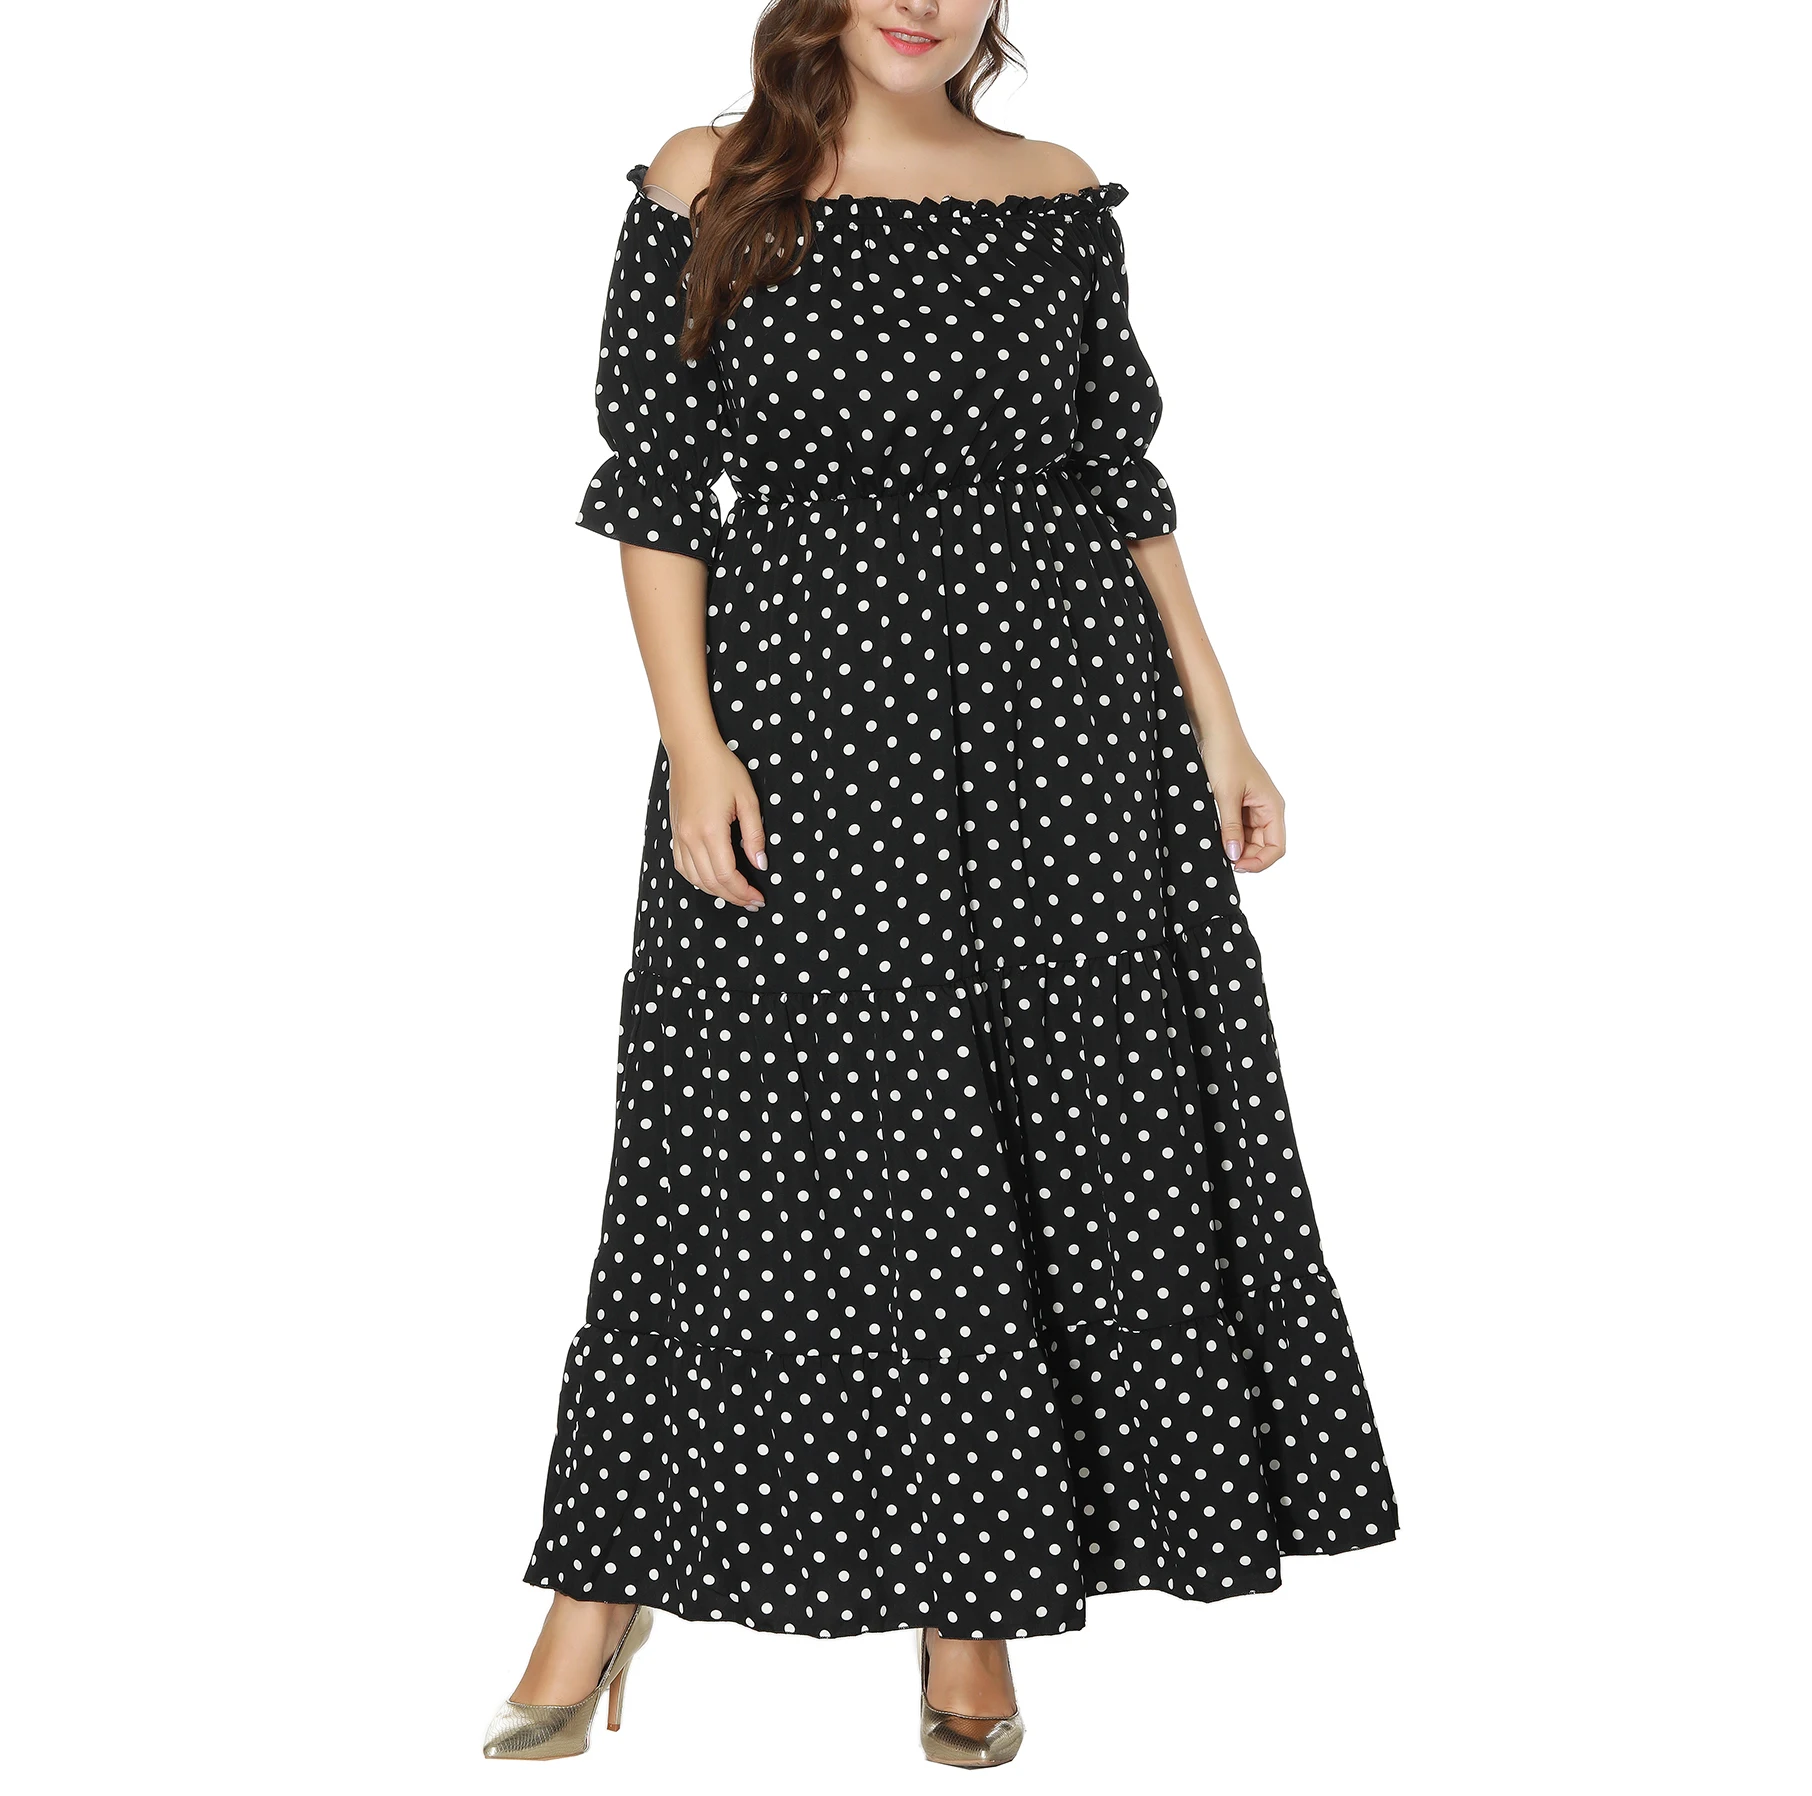 Wholesale Plus Size Clothing Women 3xl 4xl 5xl 6xl Long Maxi Dress ...